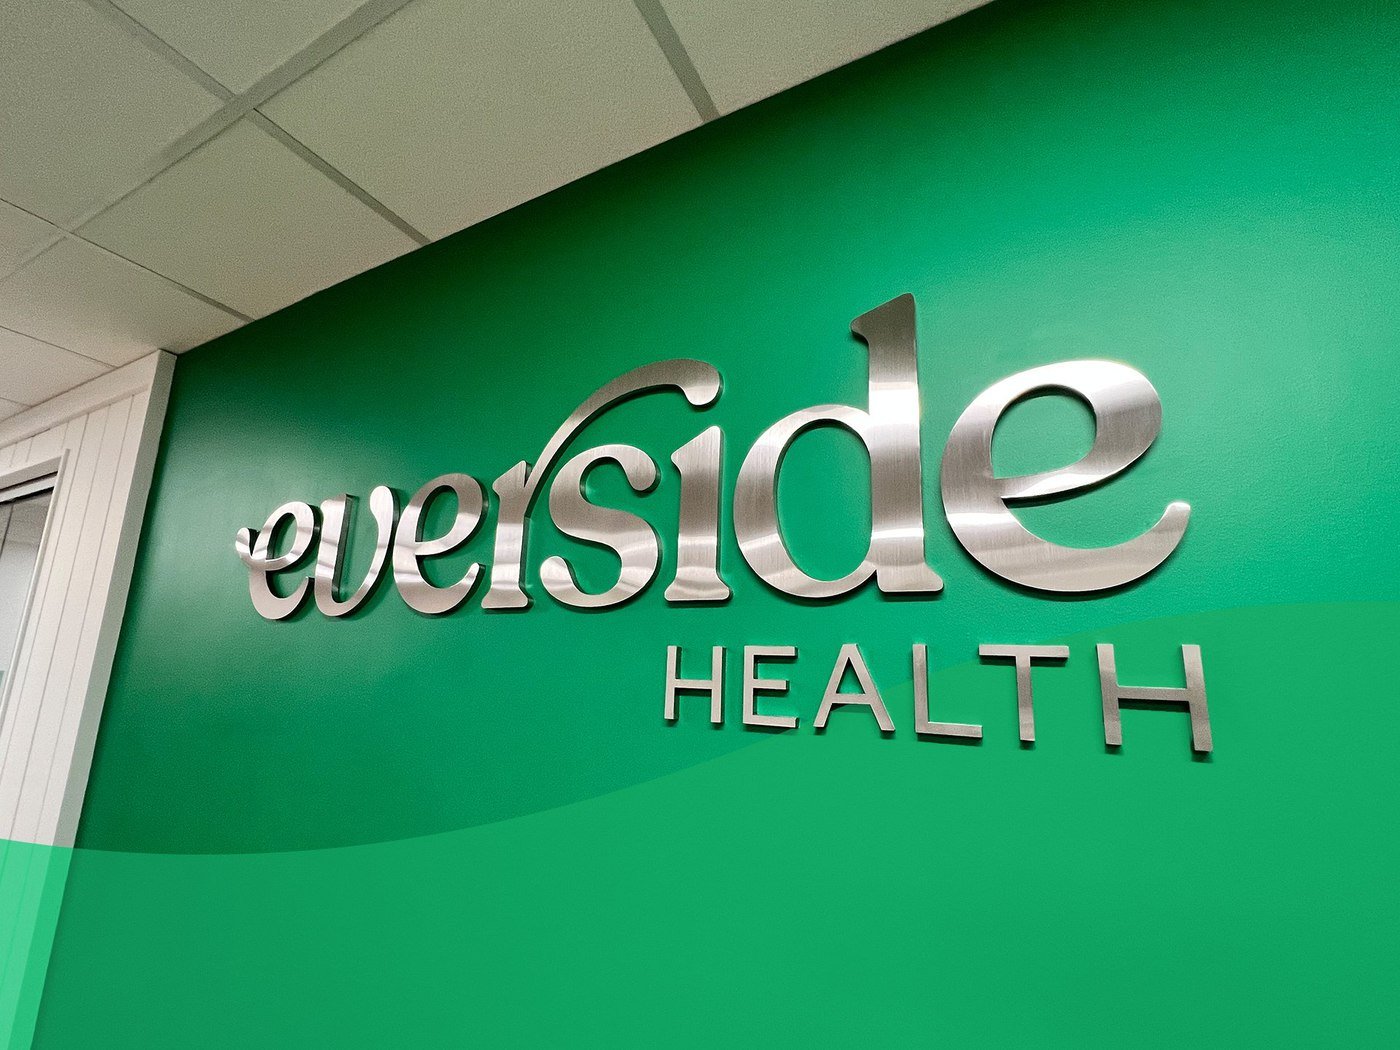 everside health logo on a green wall